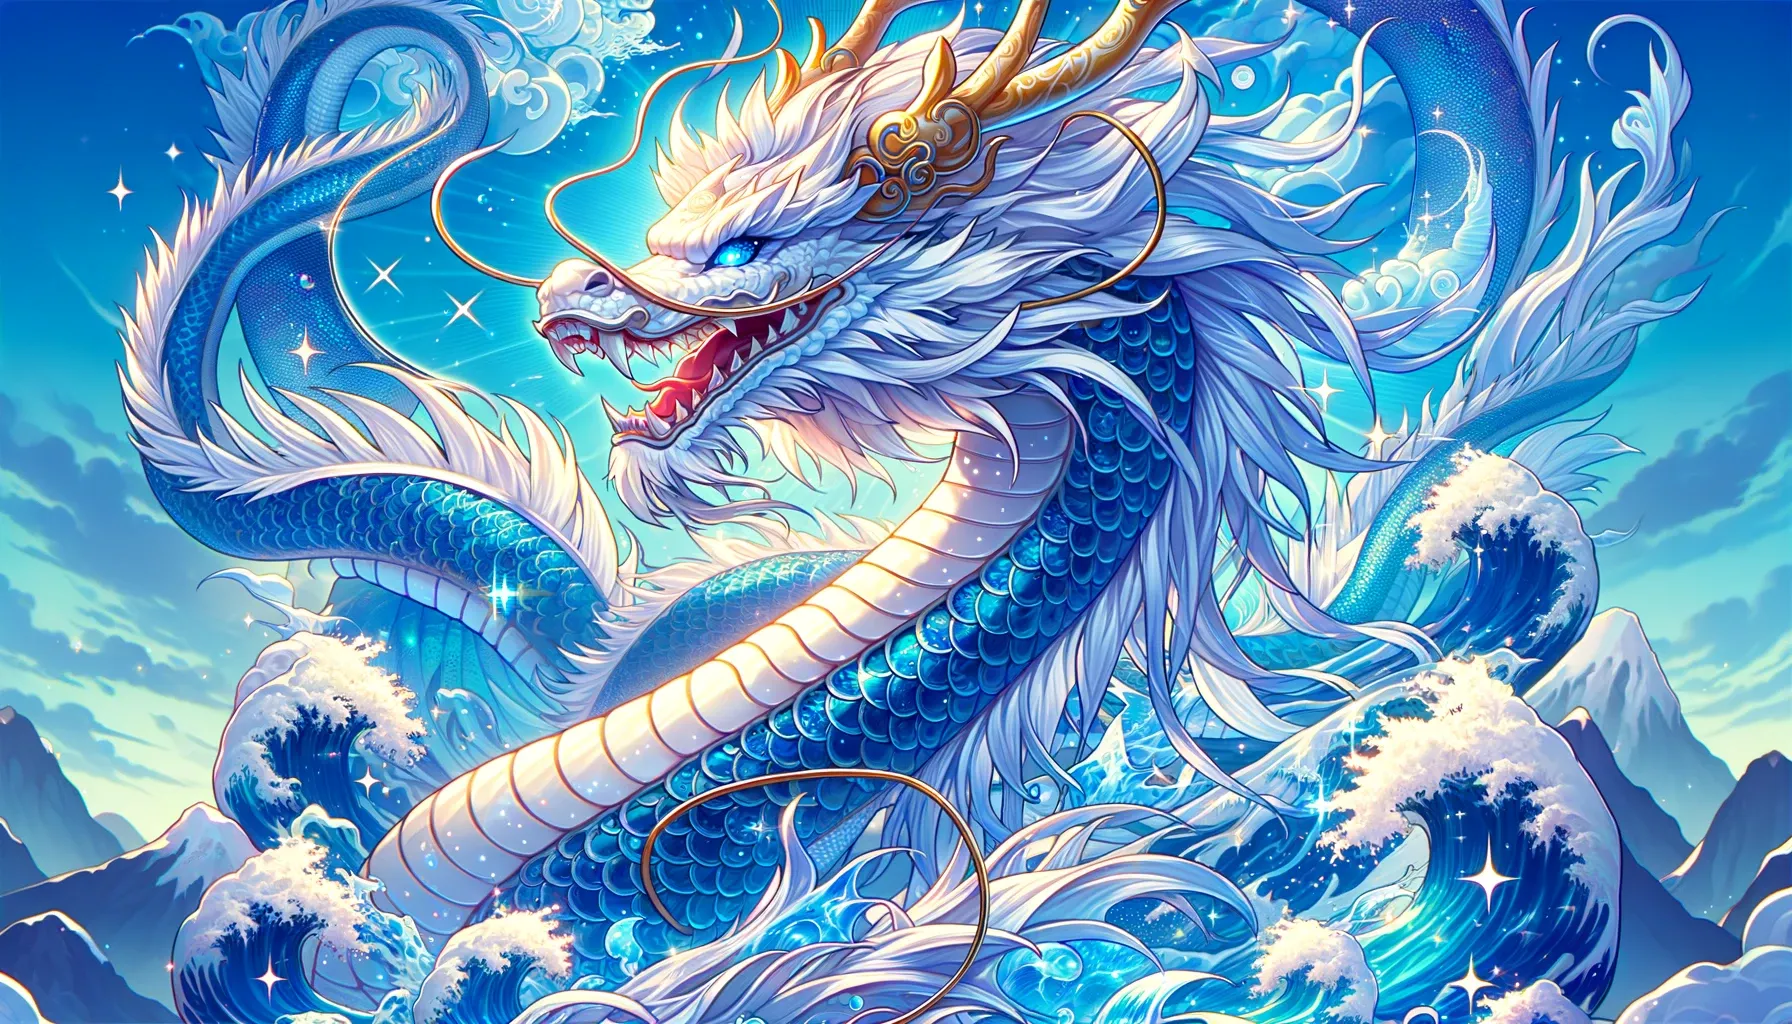 Ilustración estilo anime de Lạc Long Quân, un dragón poderoso con escamas brillantes y una melena fluida, rodeado de olas oceánicas en tonos azules vibrantes.